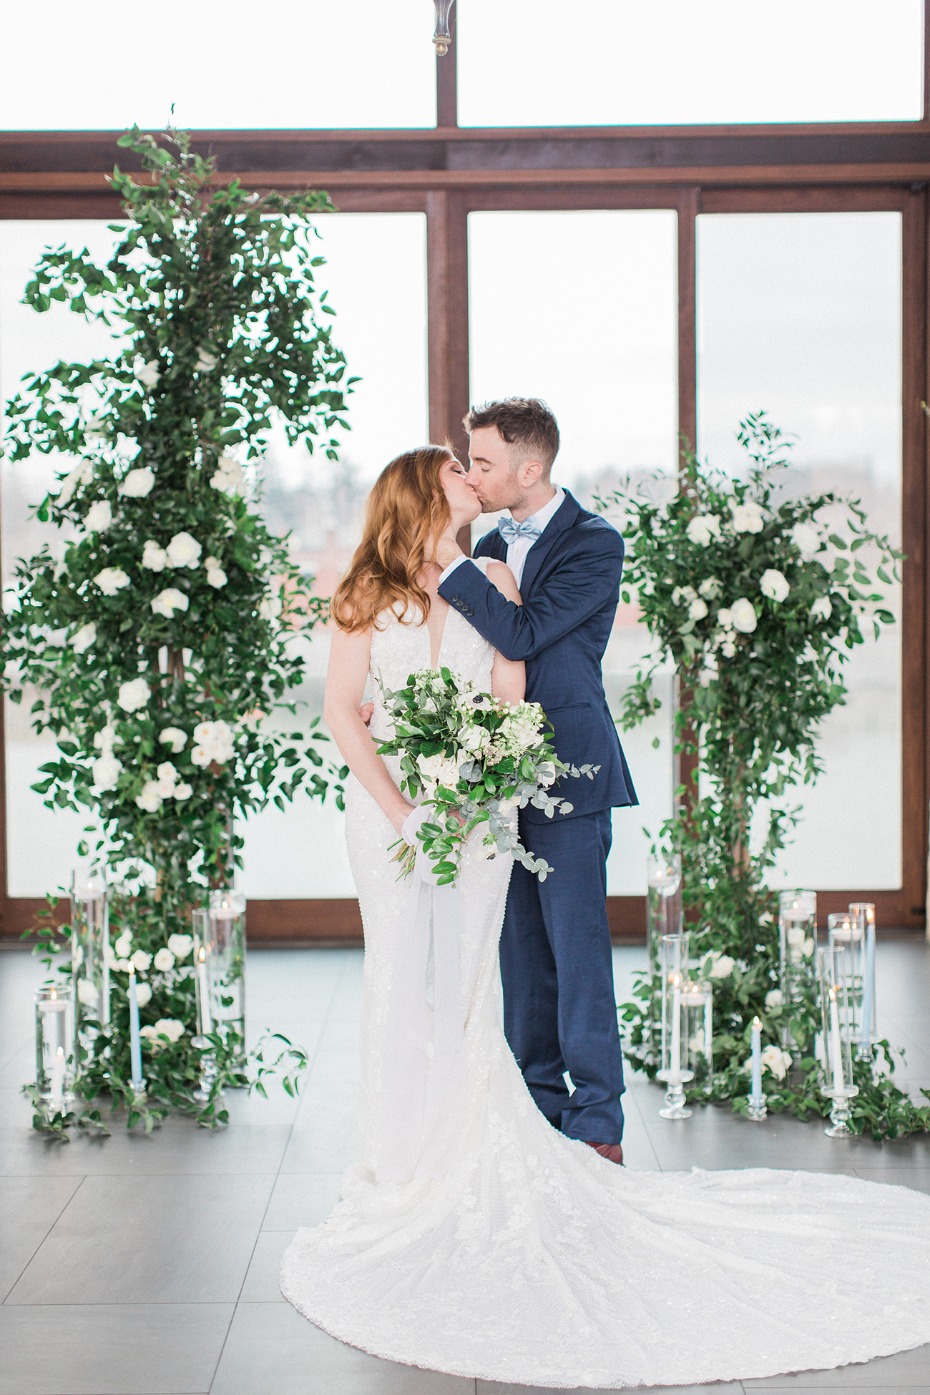 romantic wedding kiss with asymmetrical floral backdrop